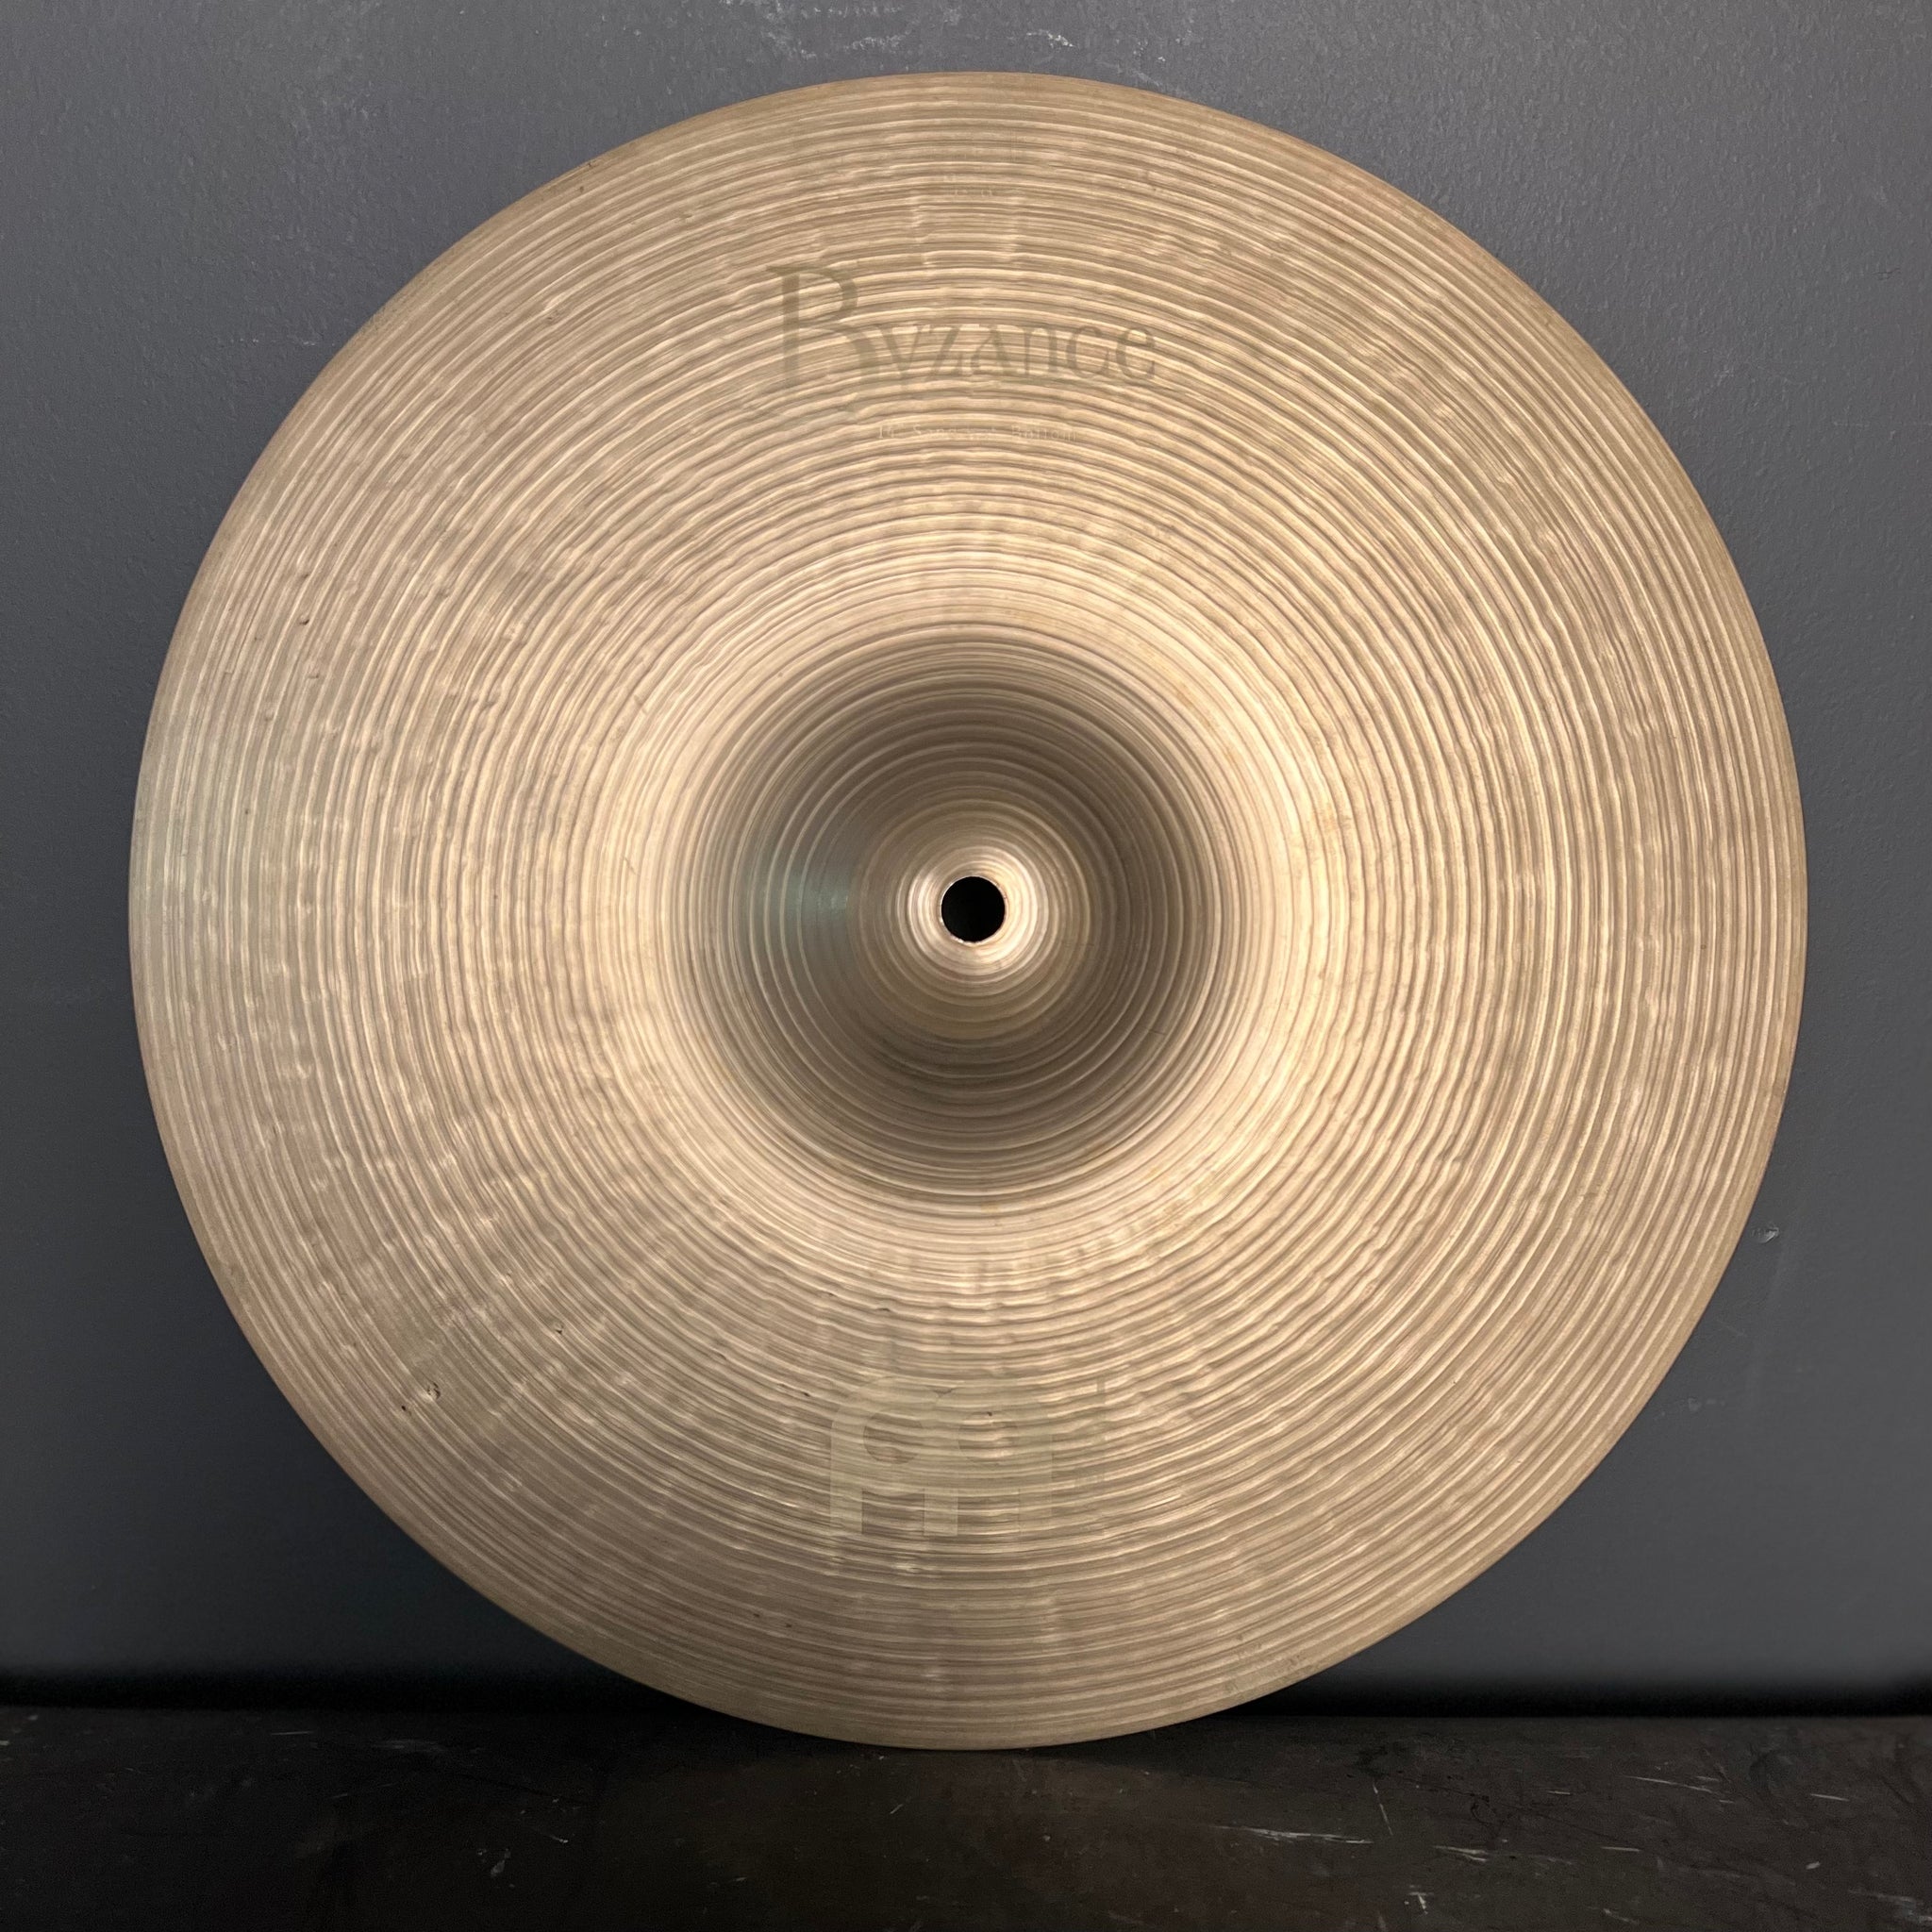 USED Meinl 14" Byzance Sand Hi-Hat Bottom Cymbal - 1518g